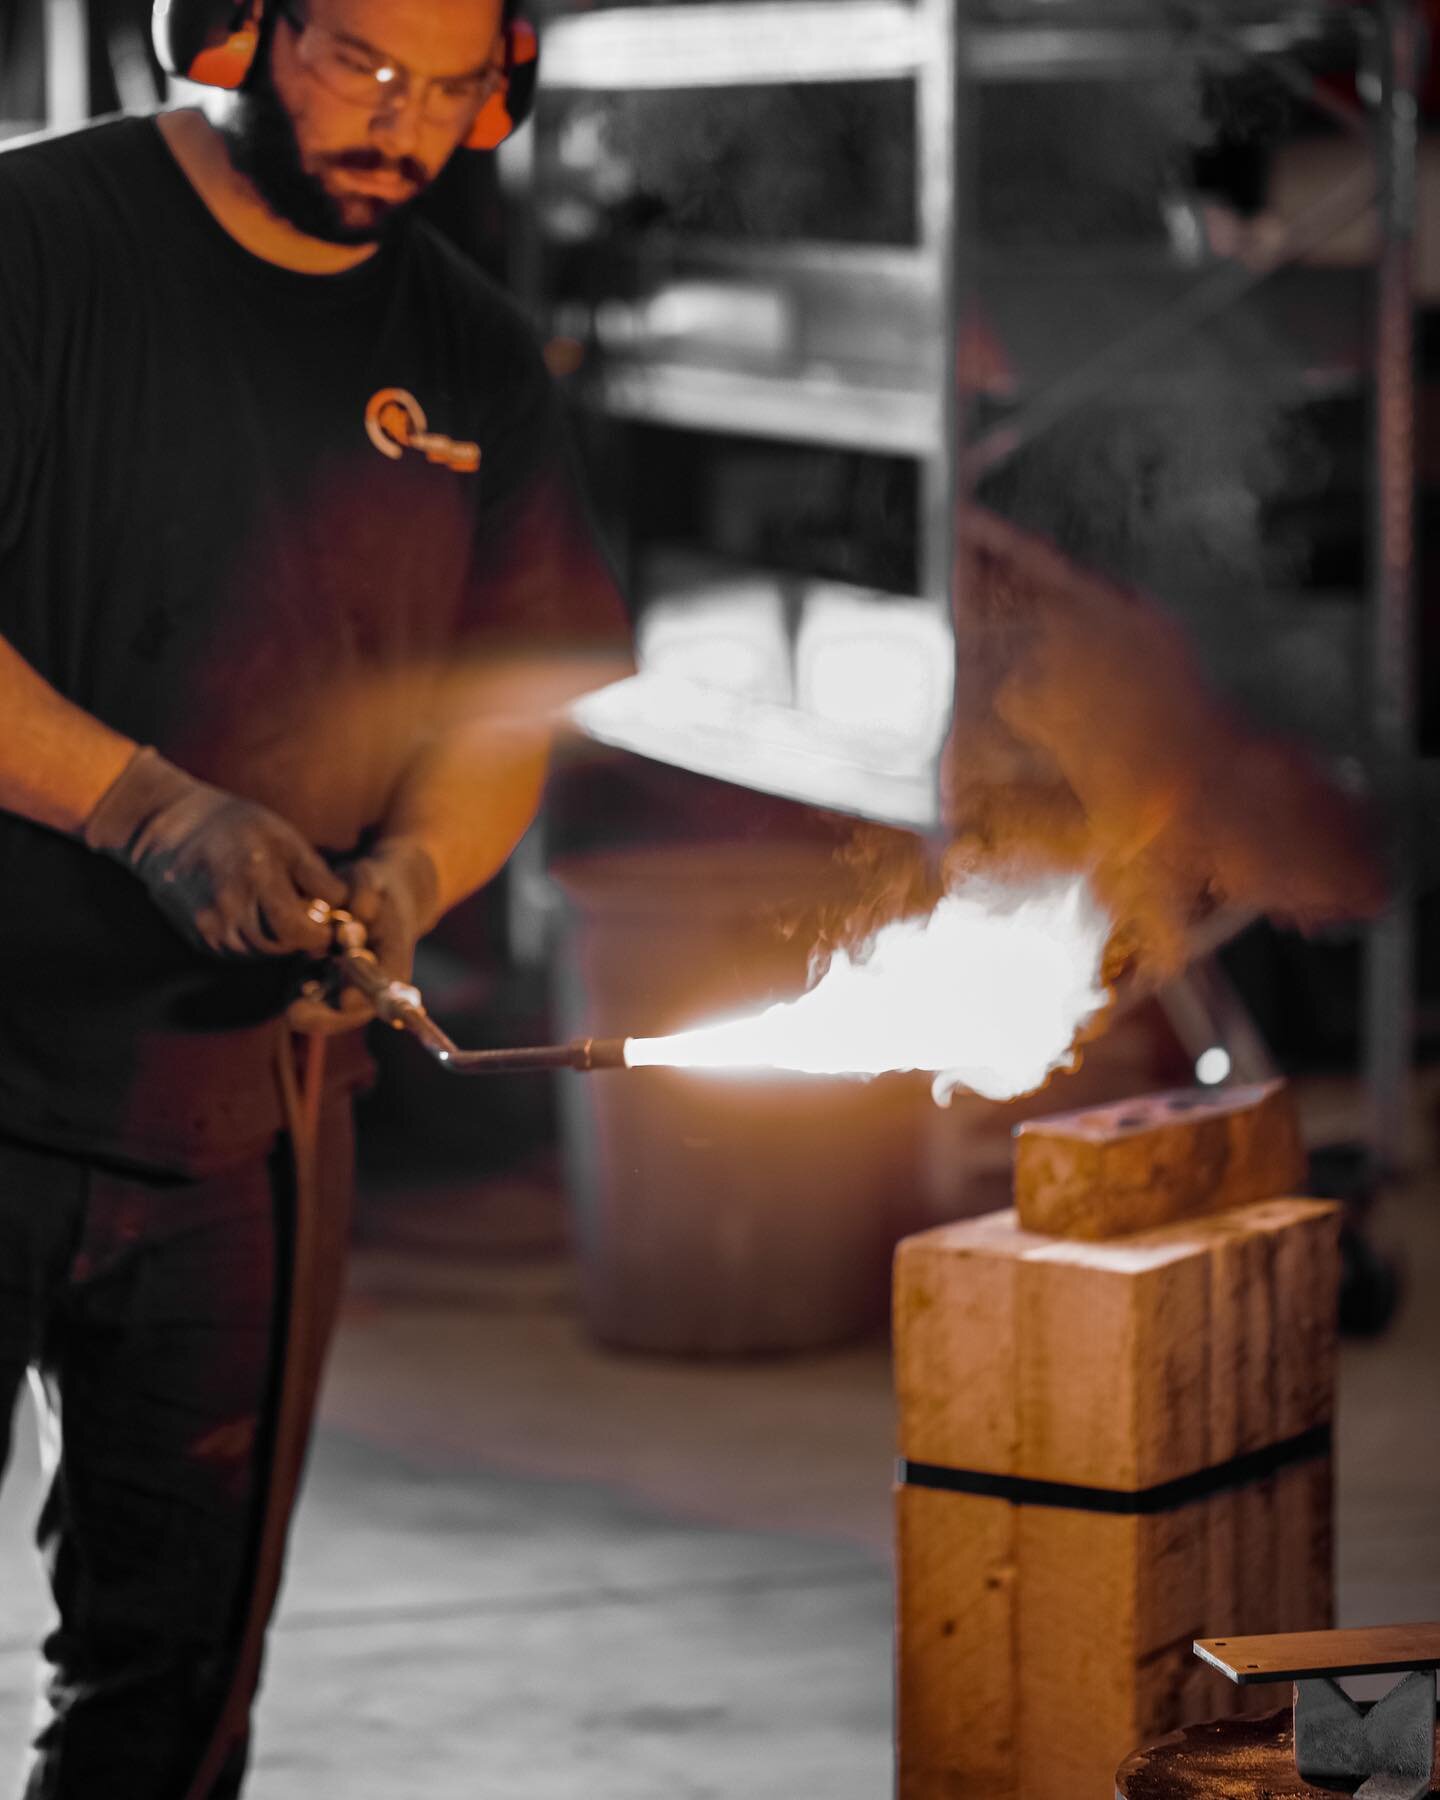 Did you know? 

In order to make our parts malleable for forming, we use a torch to heat things up! 

.
.
.
.
.
.
.
.
.
.
#weldingsparks 
#ruralalberta 
#welding 
#calgaryalberta 
#grandprairie 
#lloydminster 
#edmontonalberta 
#yycliving 
#metaldesi